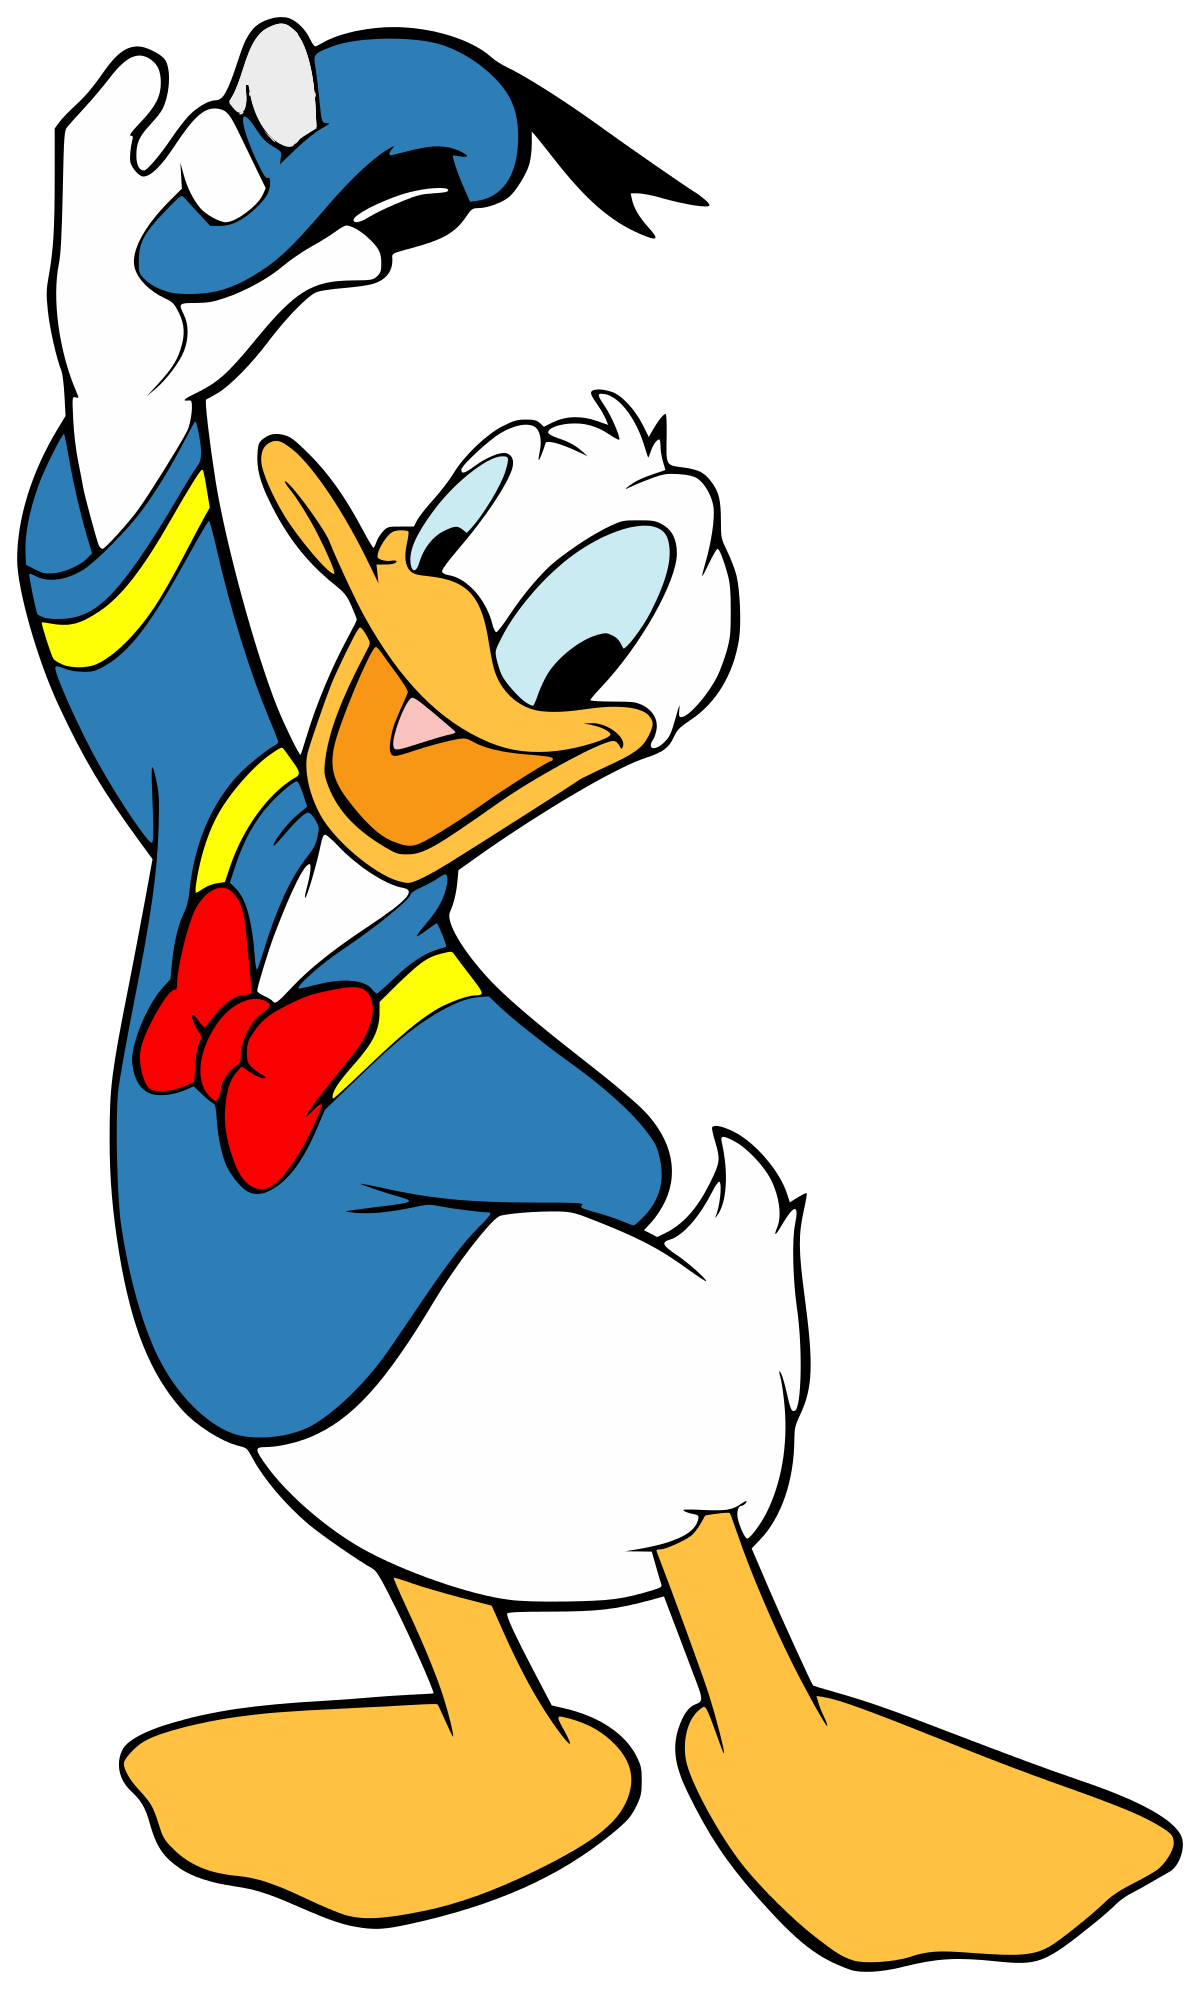 Donald duck png images. Ducks clipart gambar